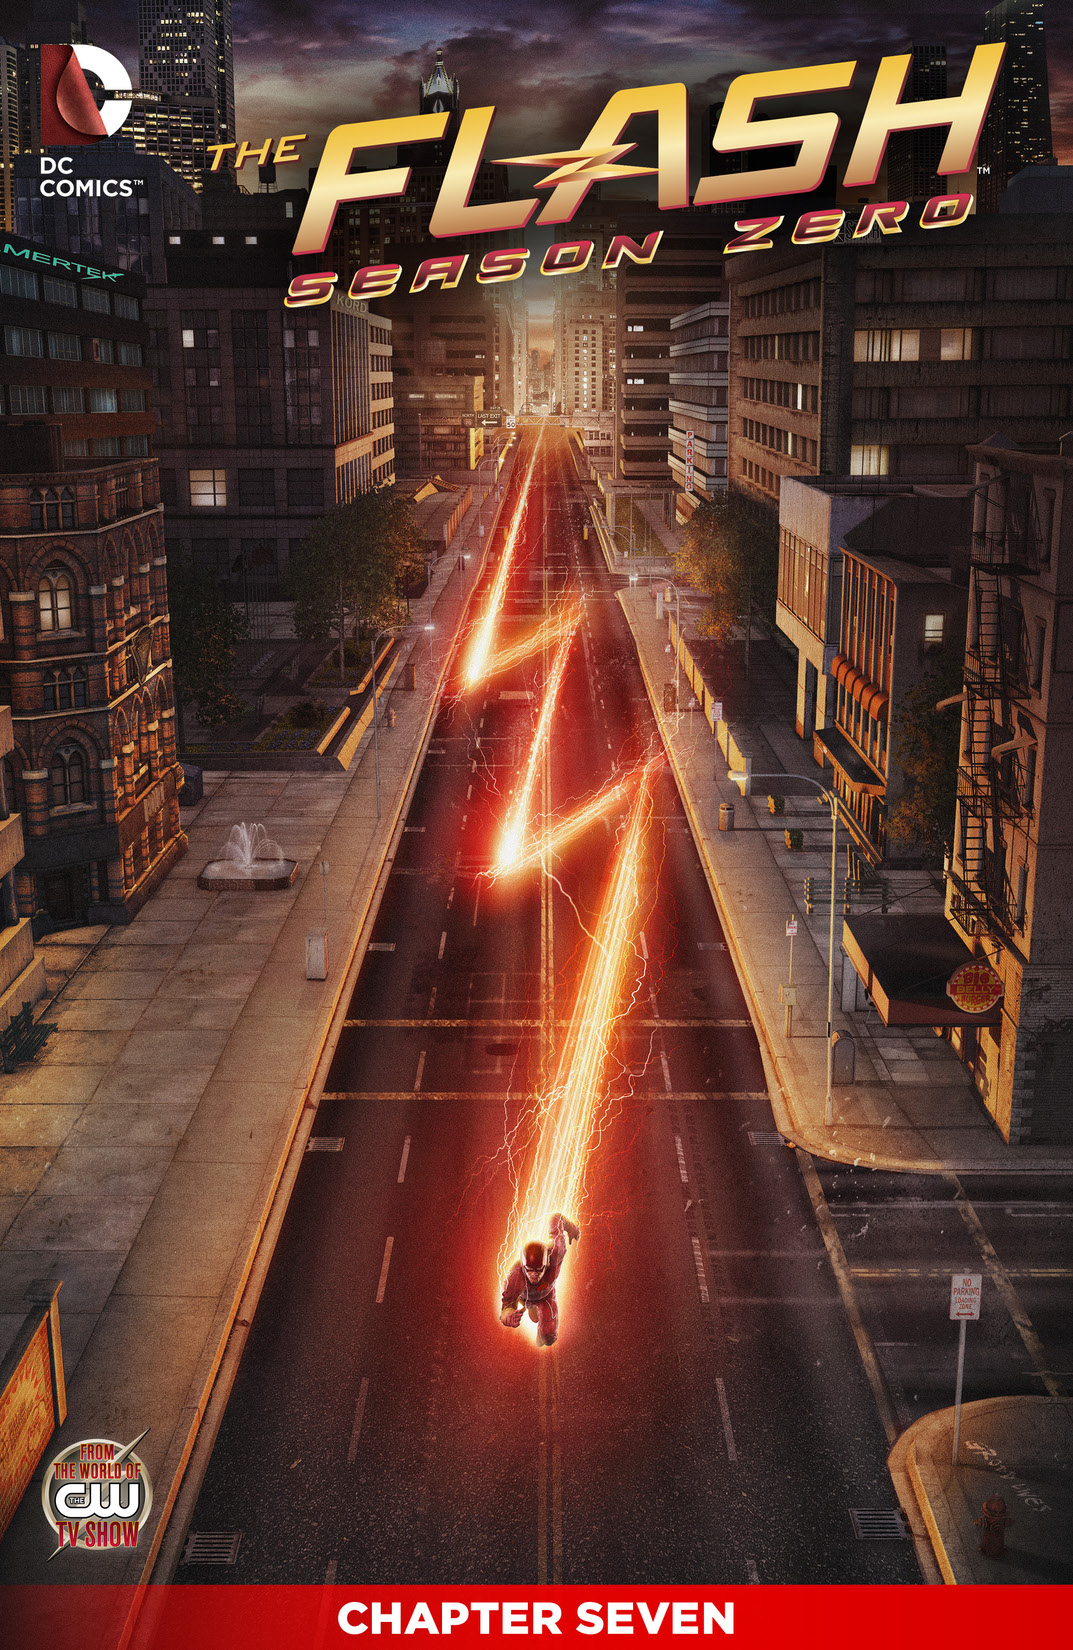 The Flash: Season Zero #7 preview images